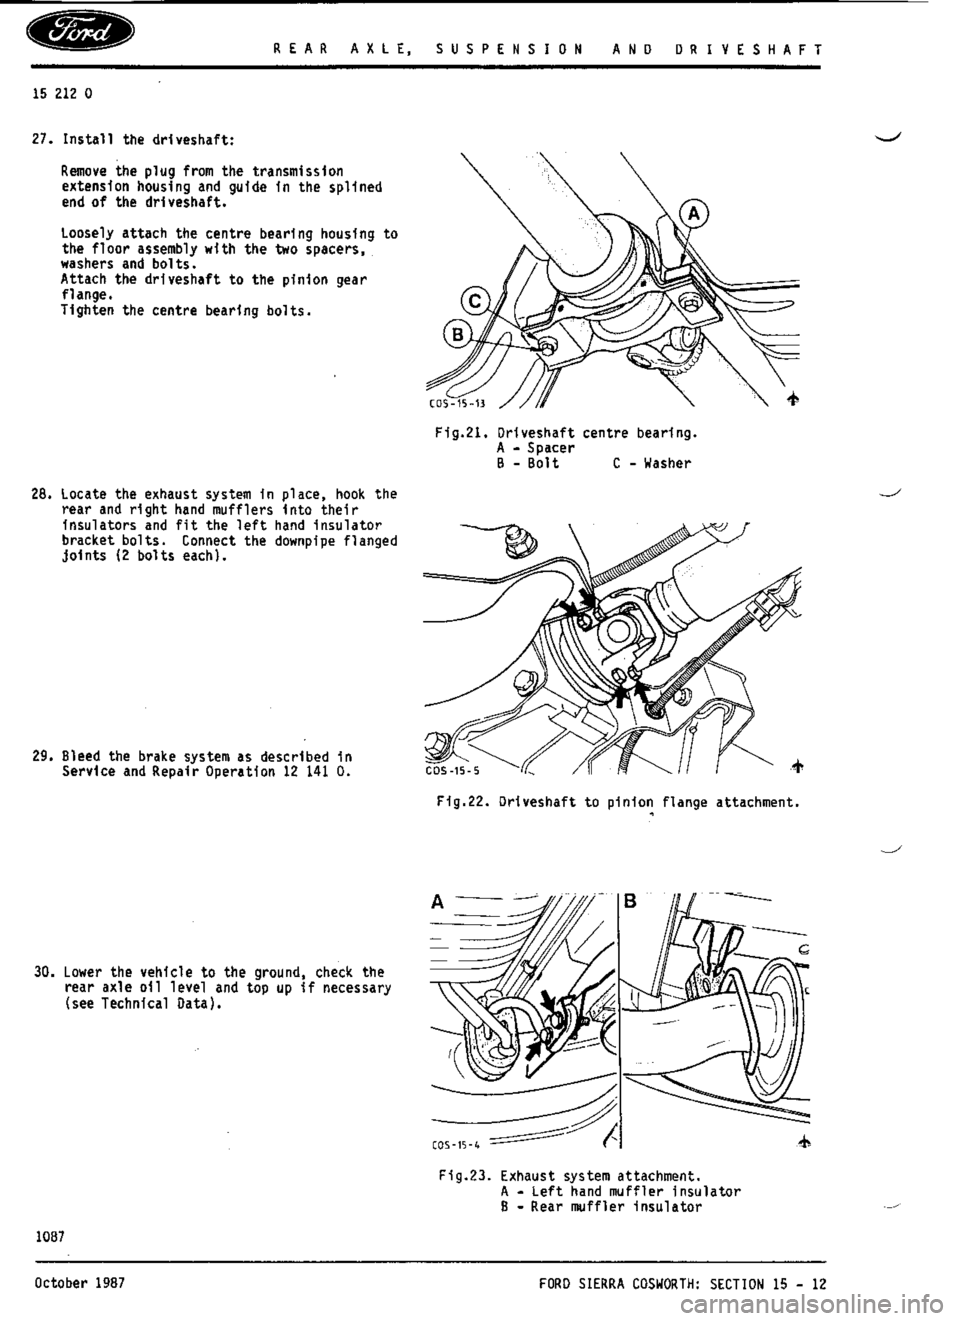 FORD SIERRA RS COSWORTH 1988 1.G Workshop Manual 